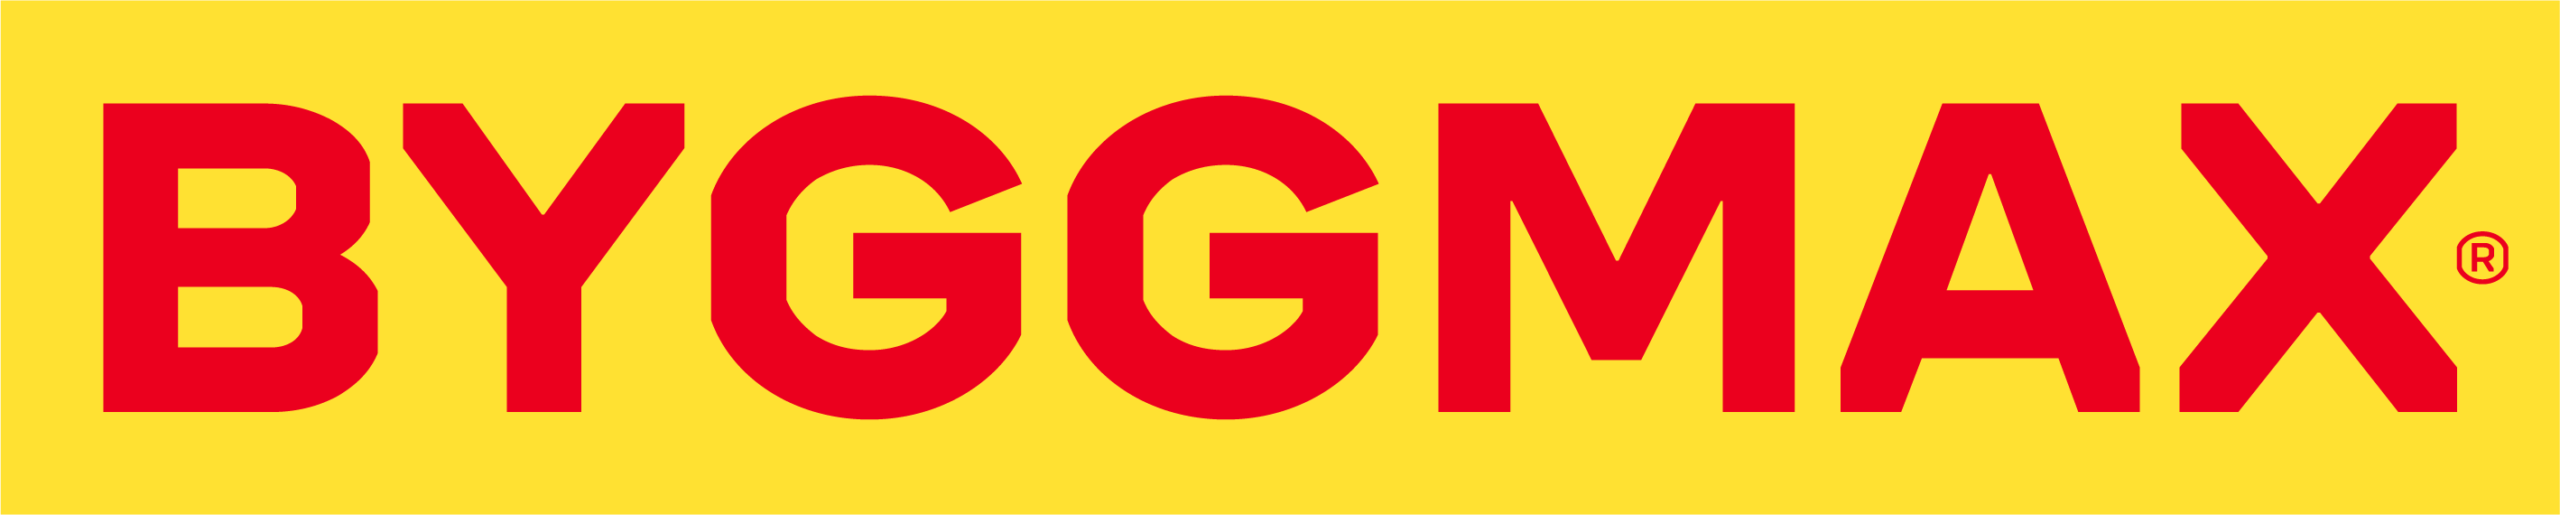 byggmax_logo-scaled